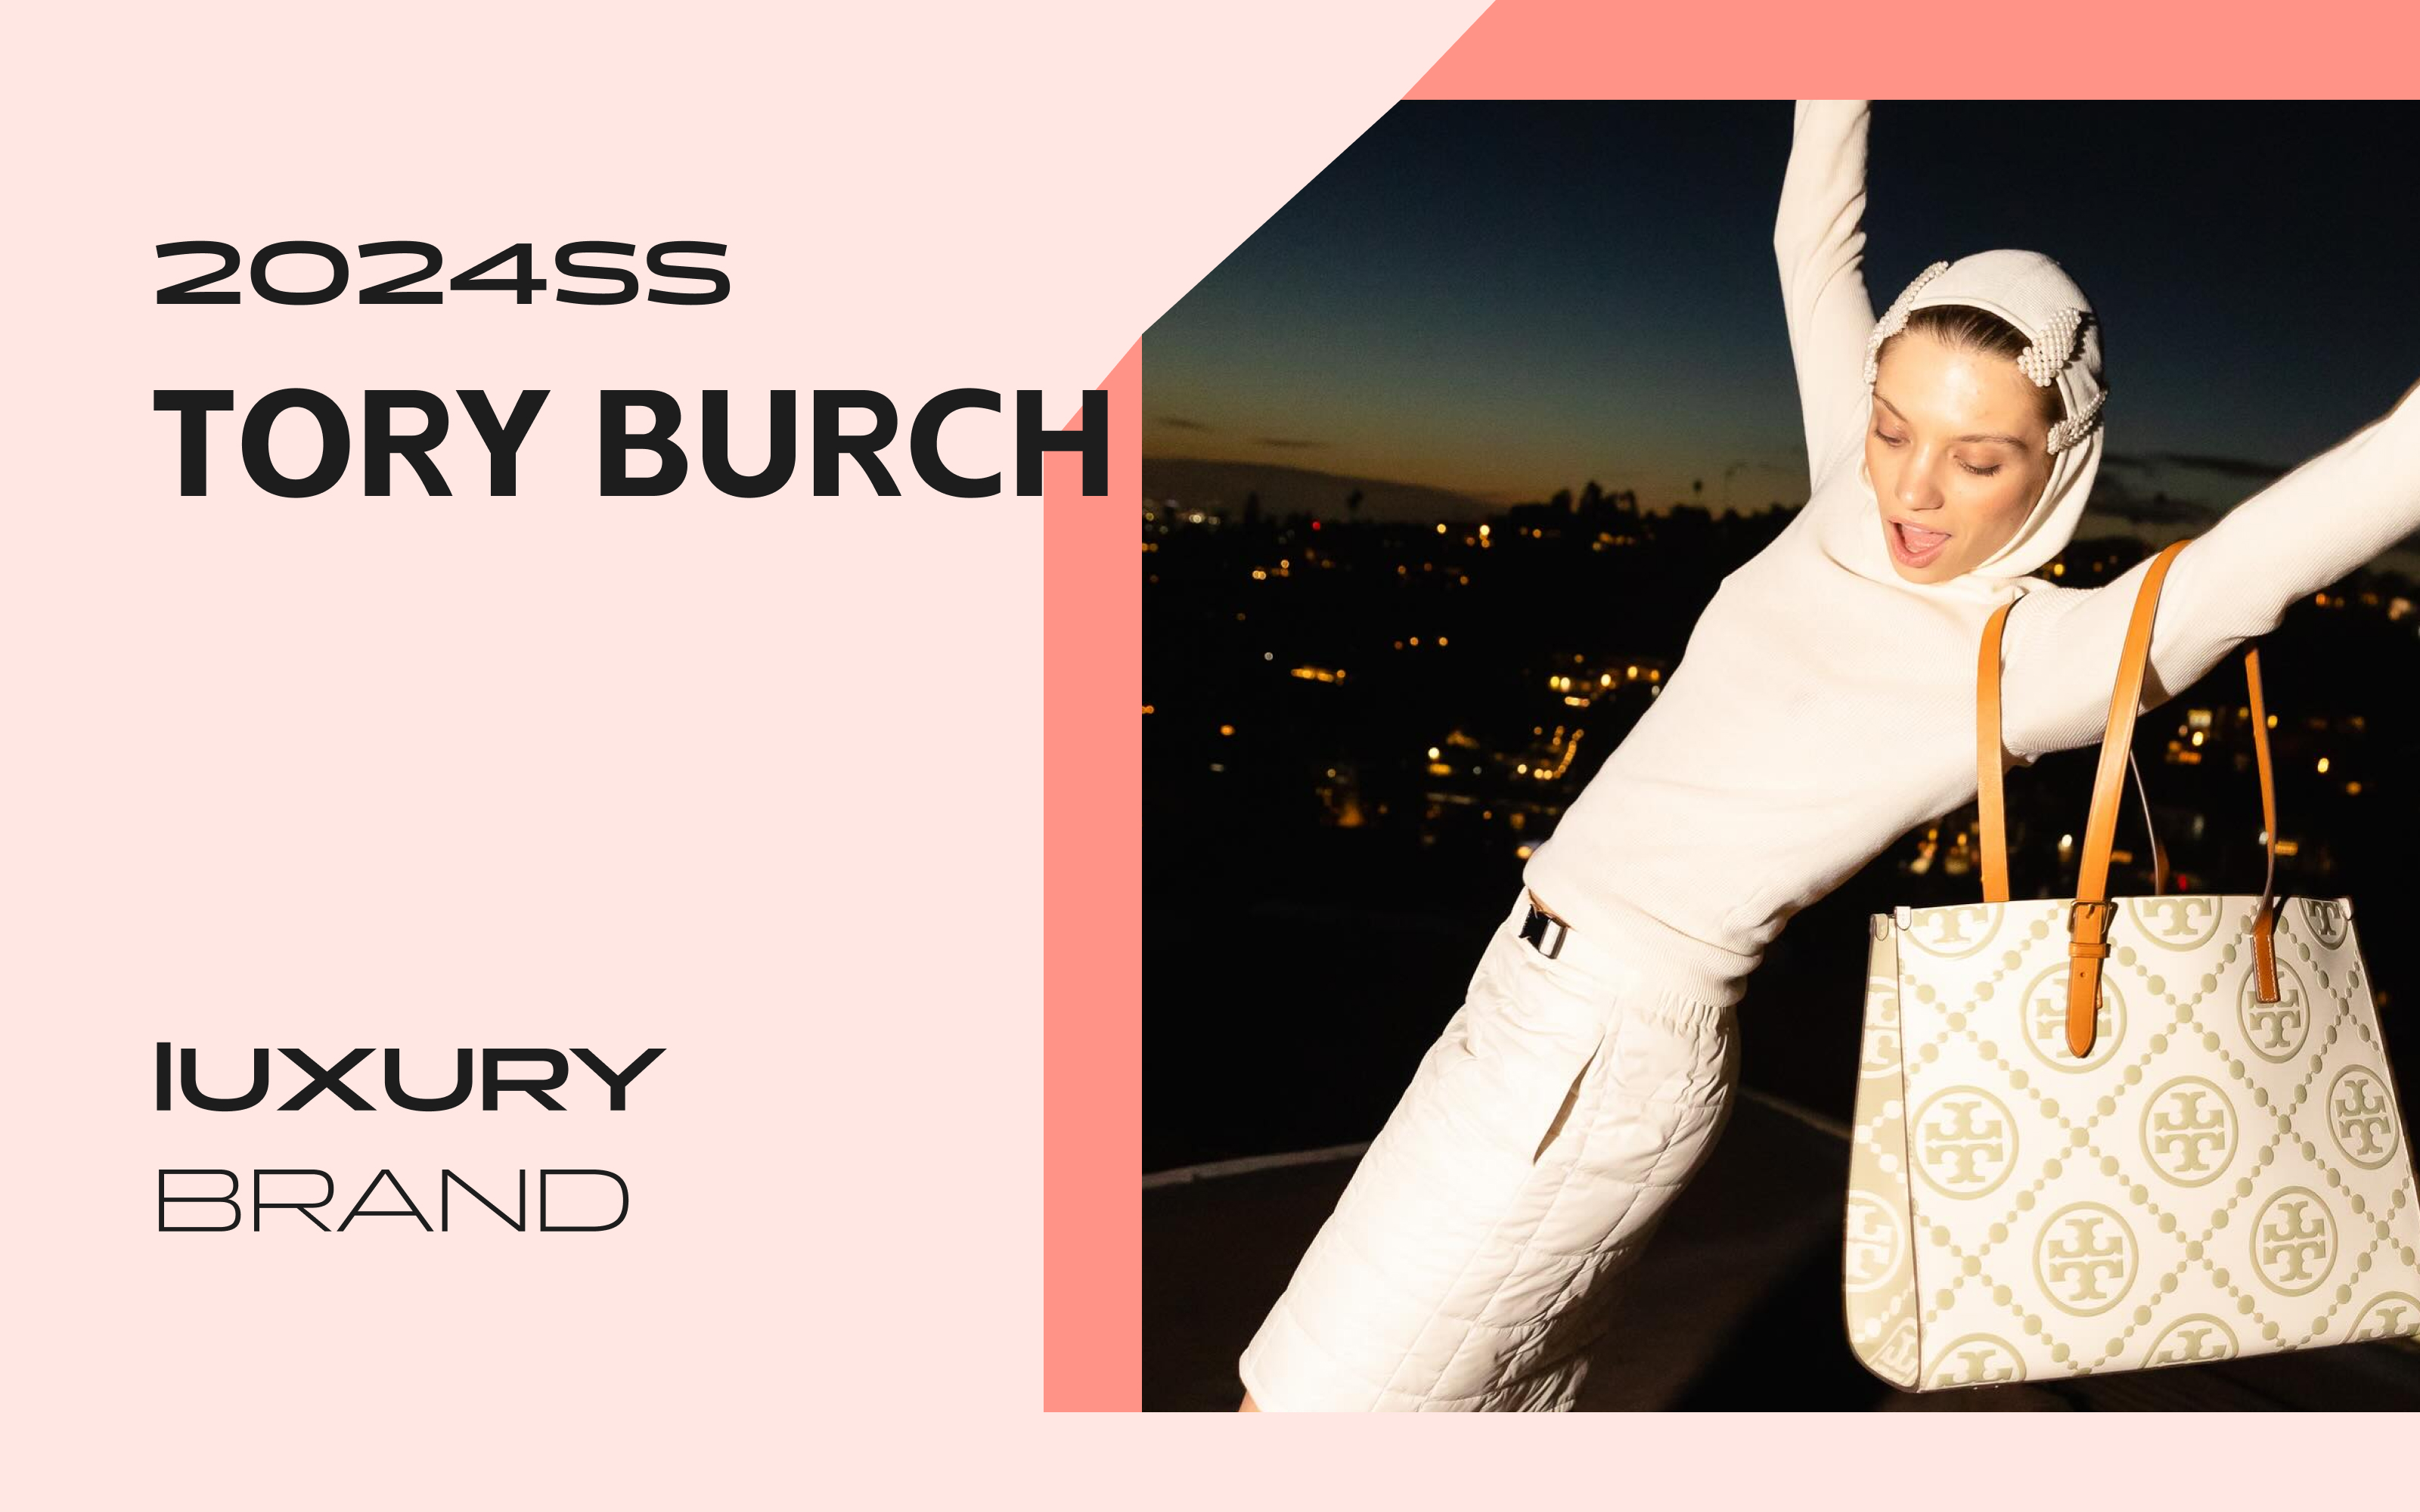 The Analysis of Tory Burch The Luxury Women's Knitwear Brand